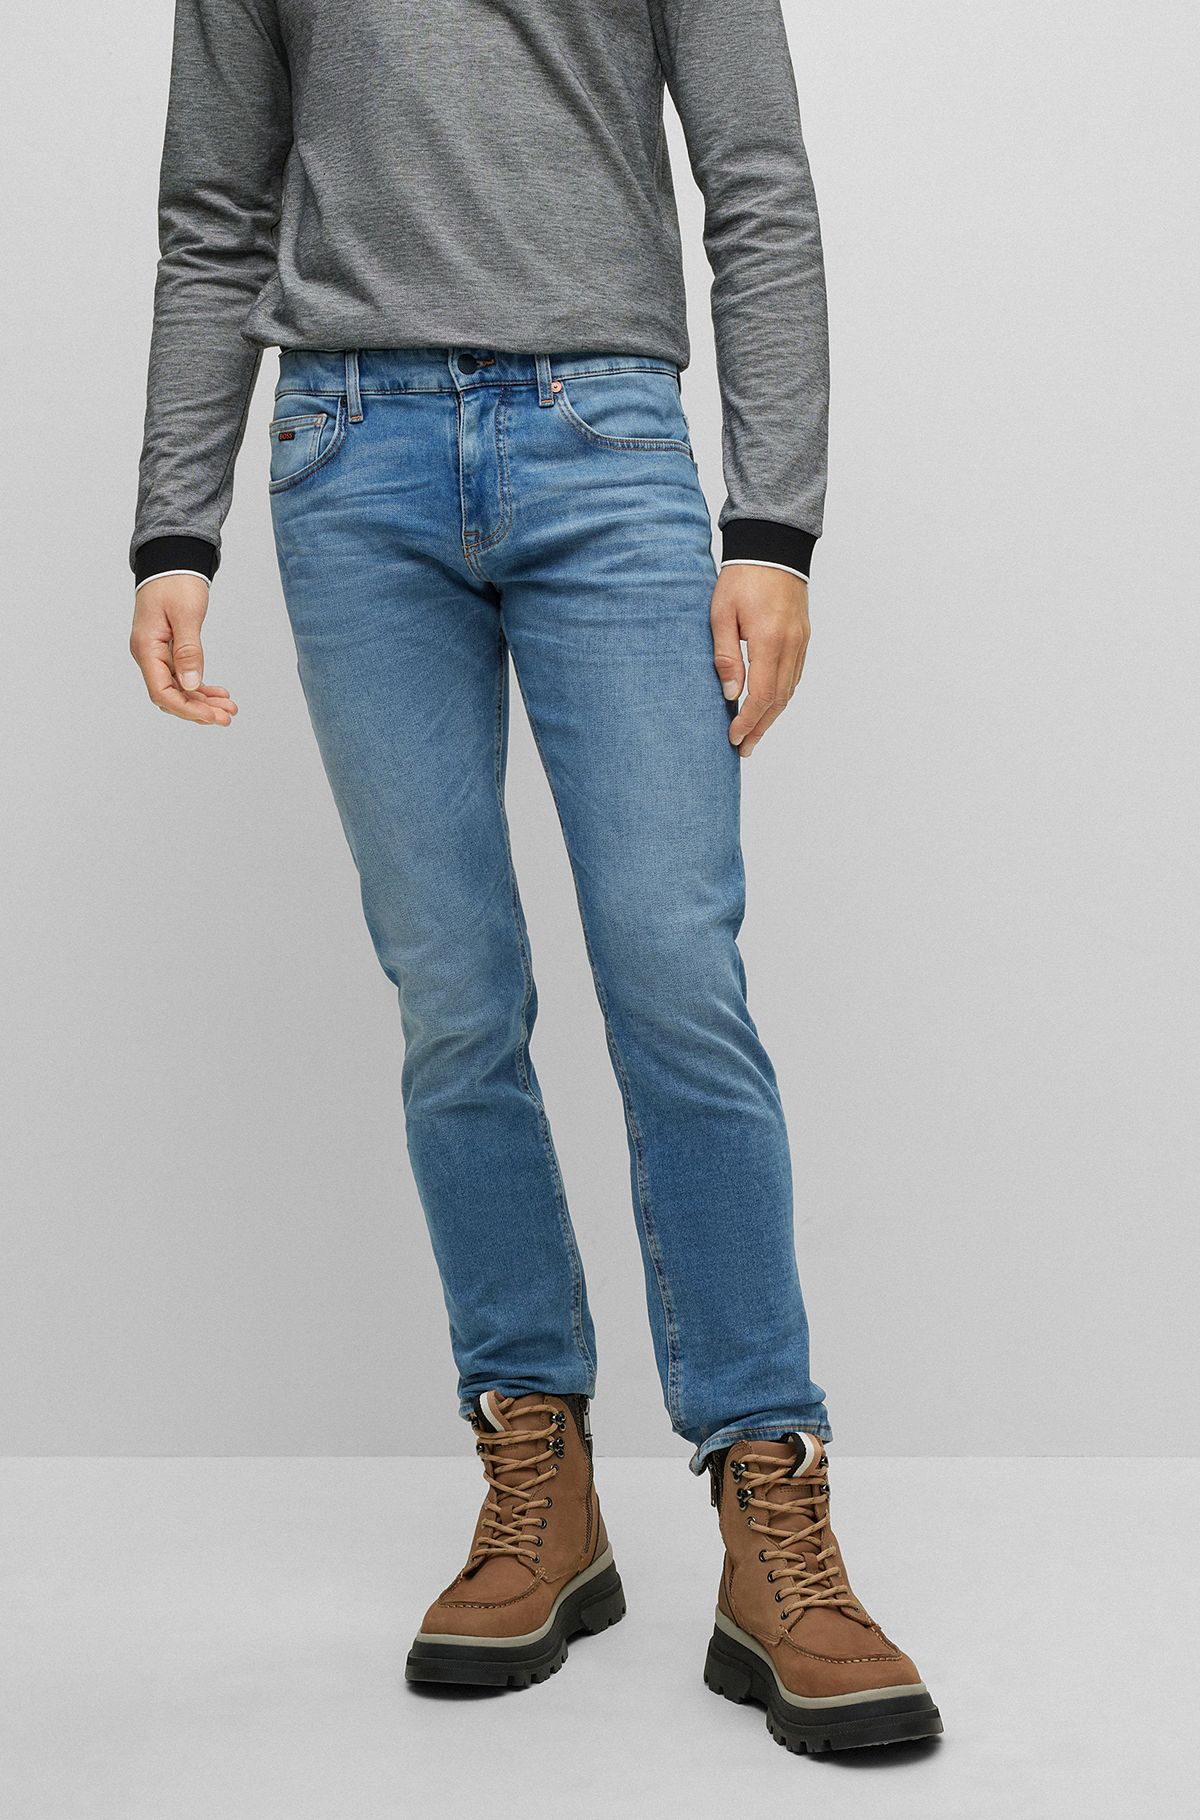 Extra-slim-fit jeans in blue supreme-movement denim